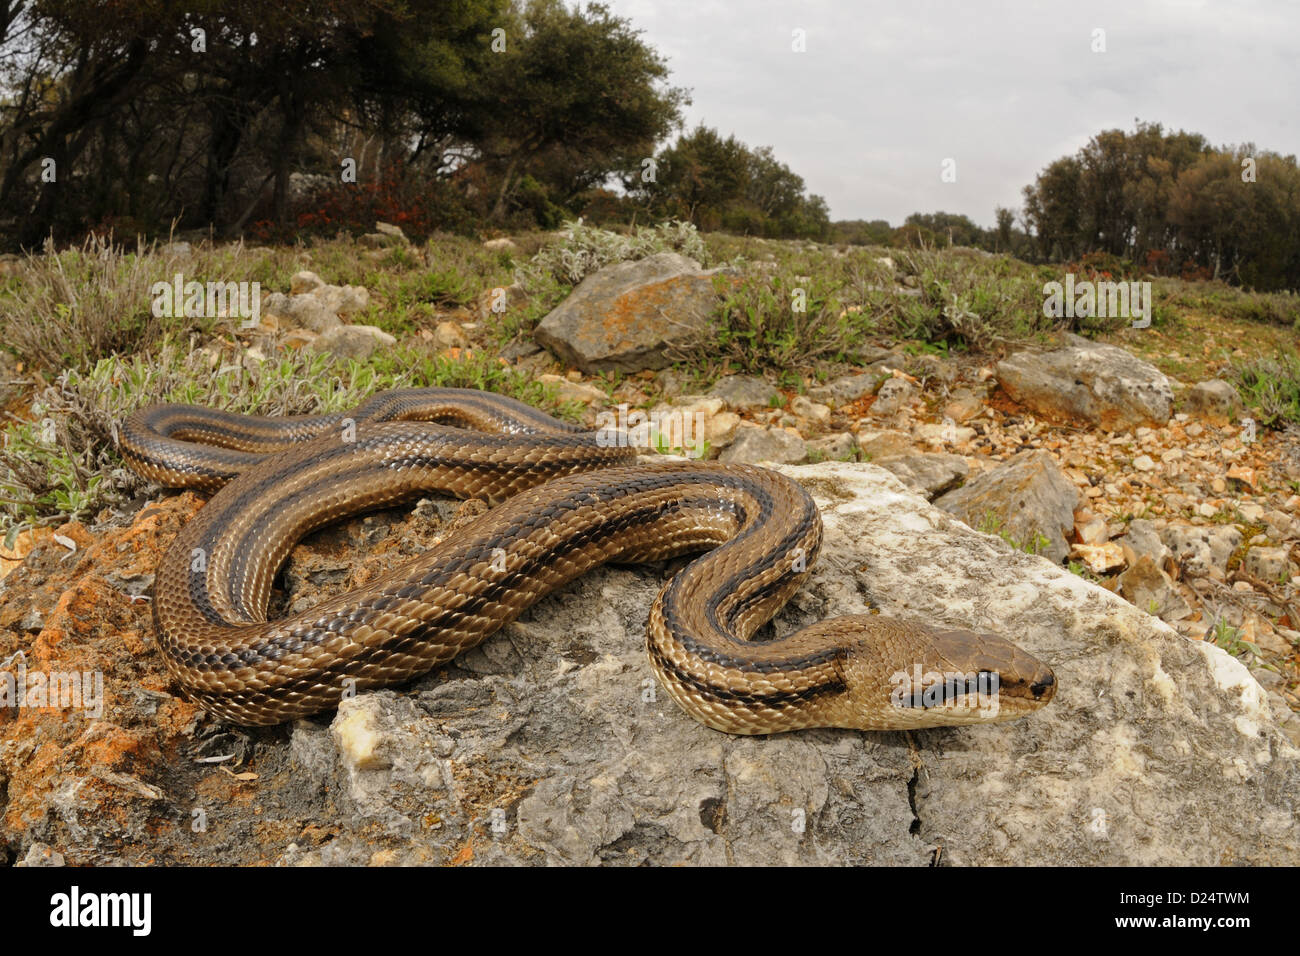 Four-lined Snake (Elaphe quatuorlineata) adult, on rocks in habitat, Croatia, april Stock Photo